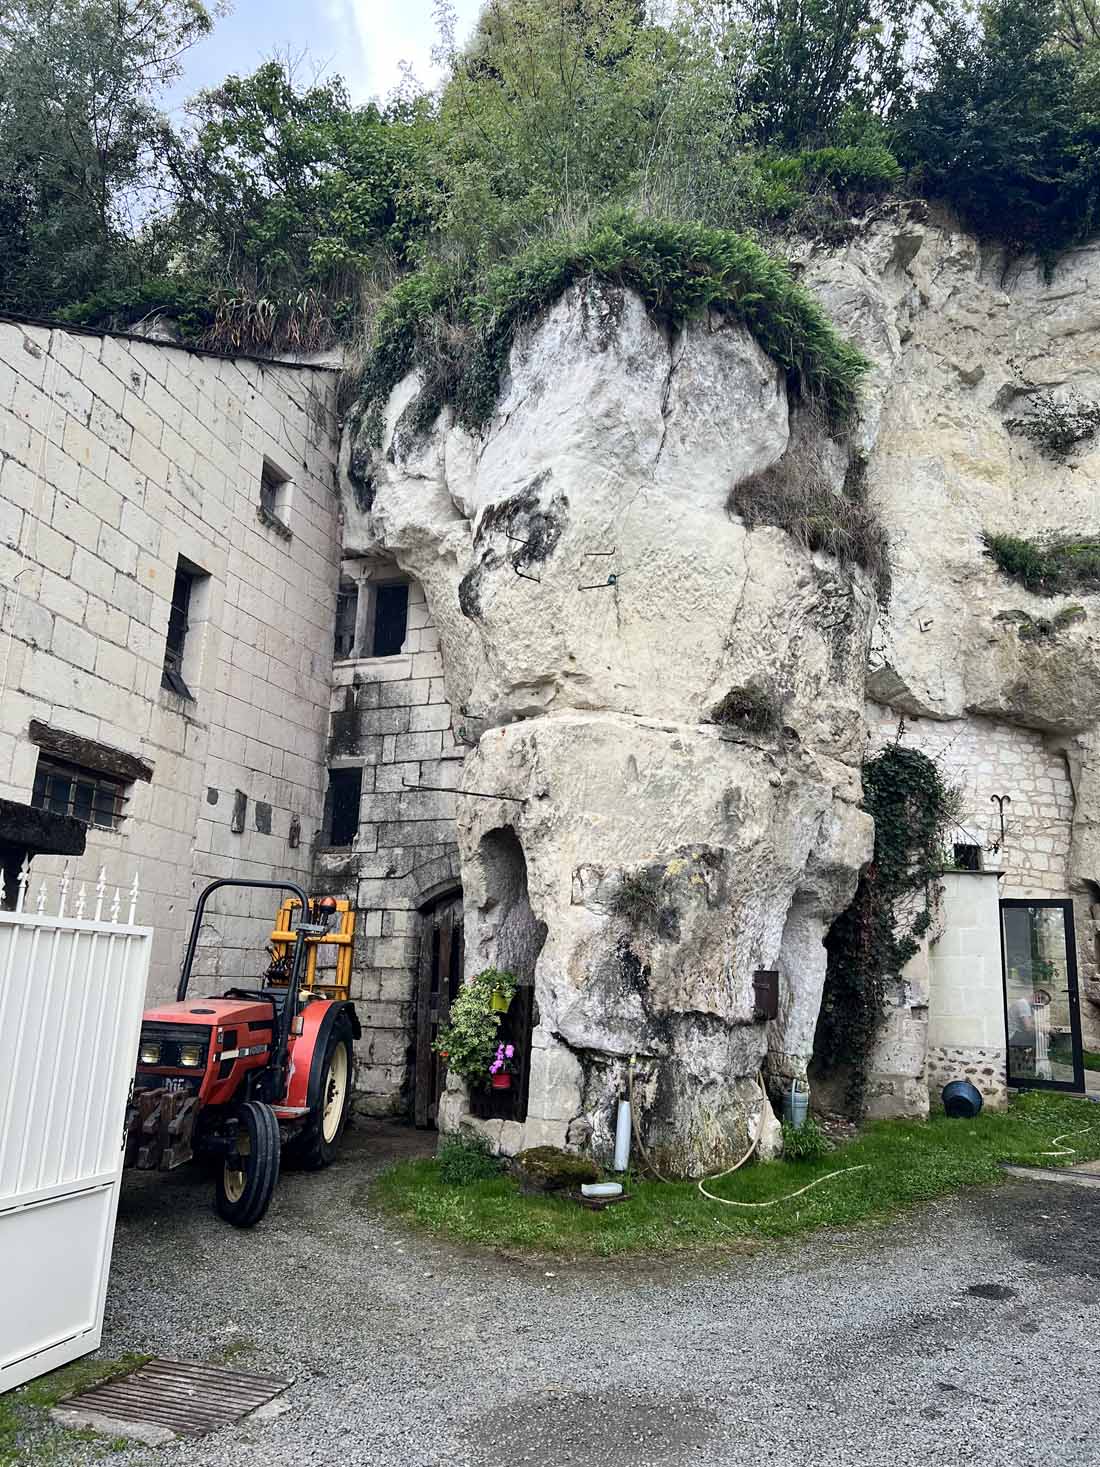 Troglodyte caves at Turquant9